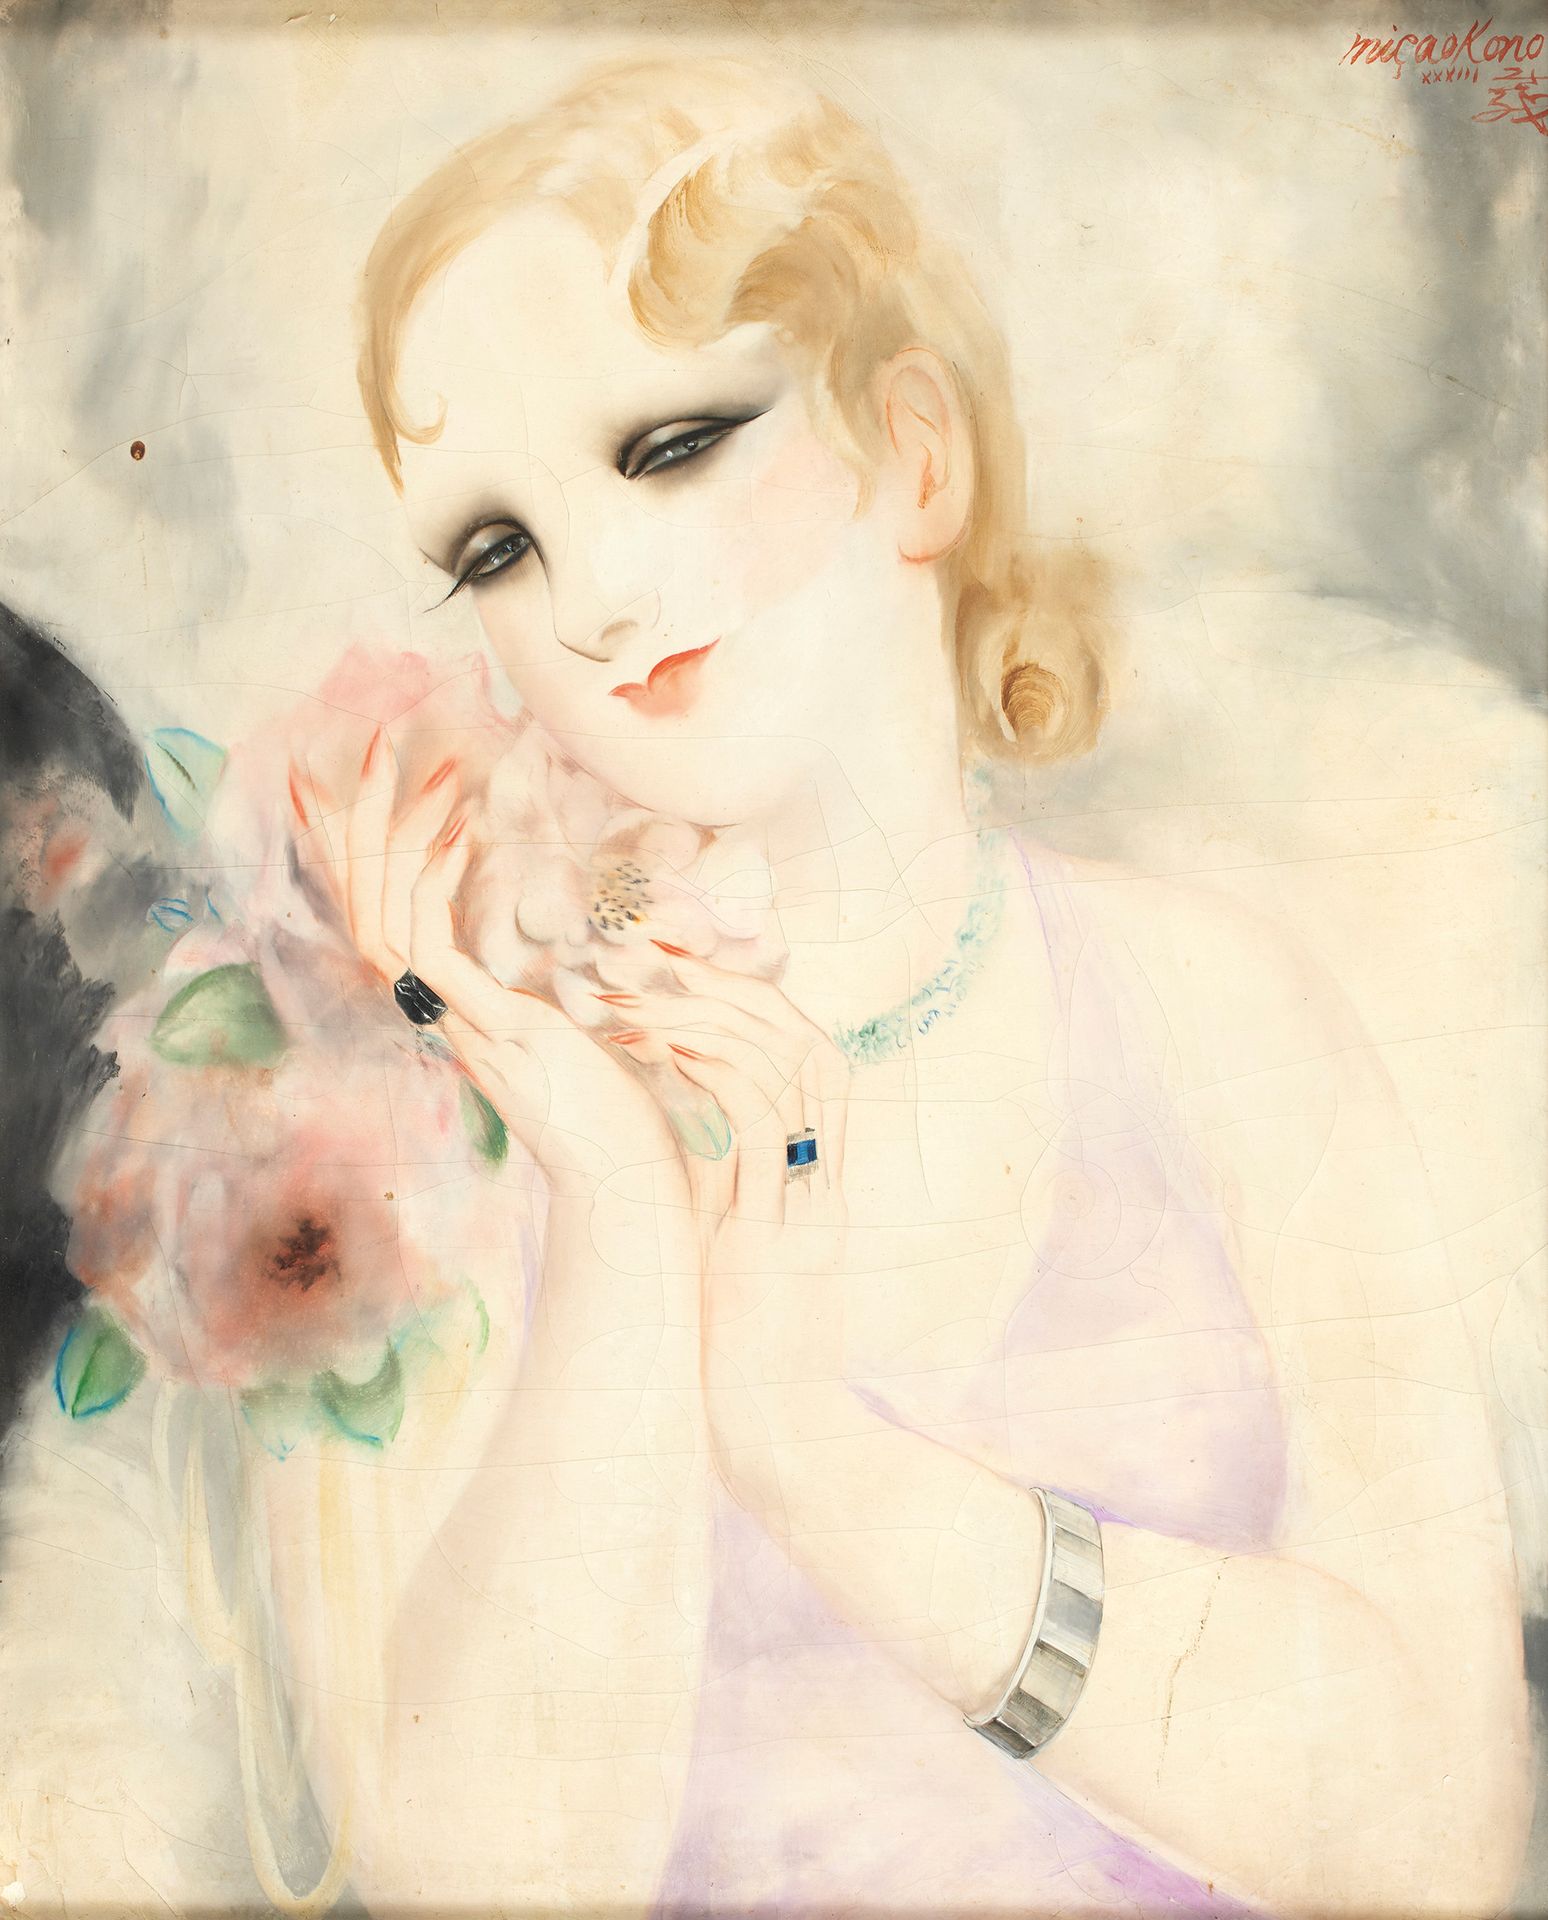 Micao KONO (1876-1954) Micao KONO (1876-1954)
Frau mit Blumen, 1933
Öl auf Leinw&hellip;